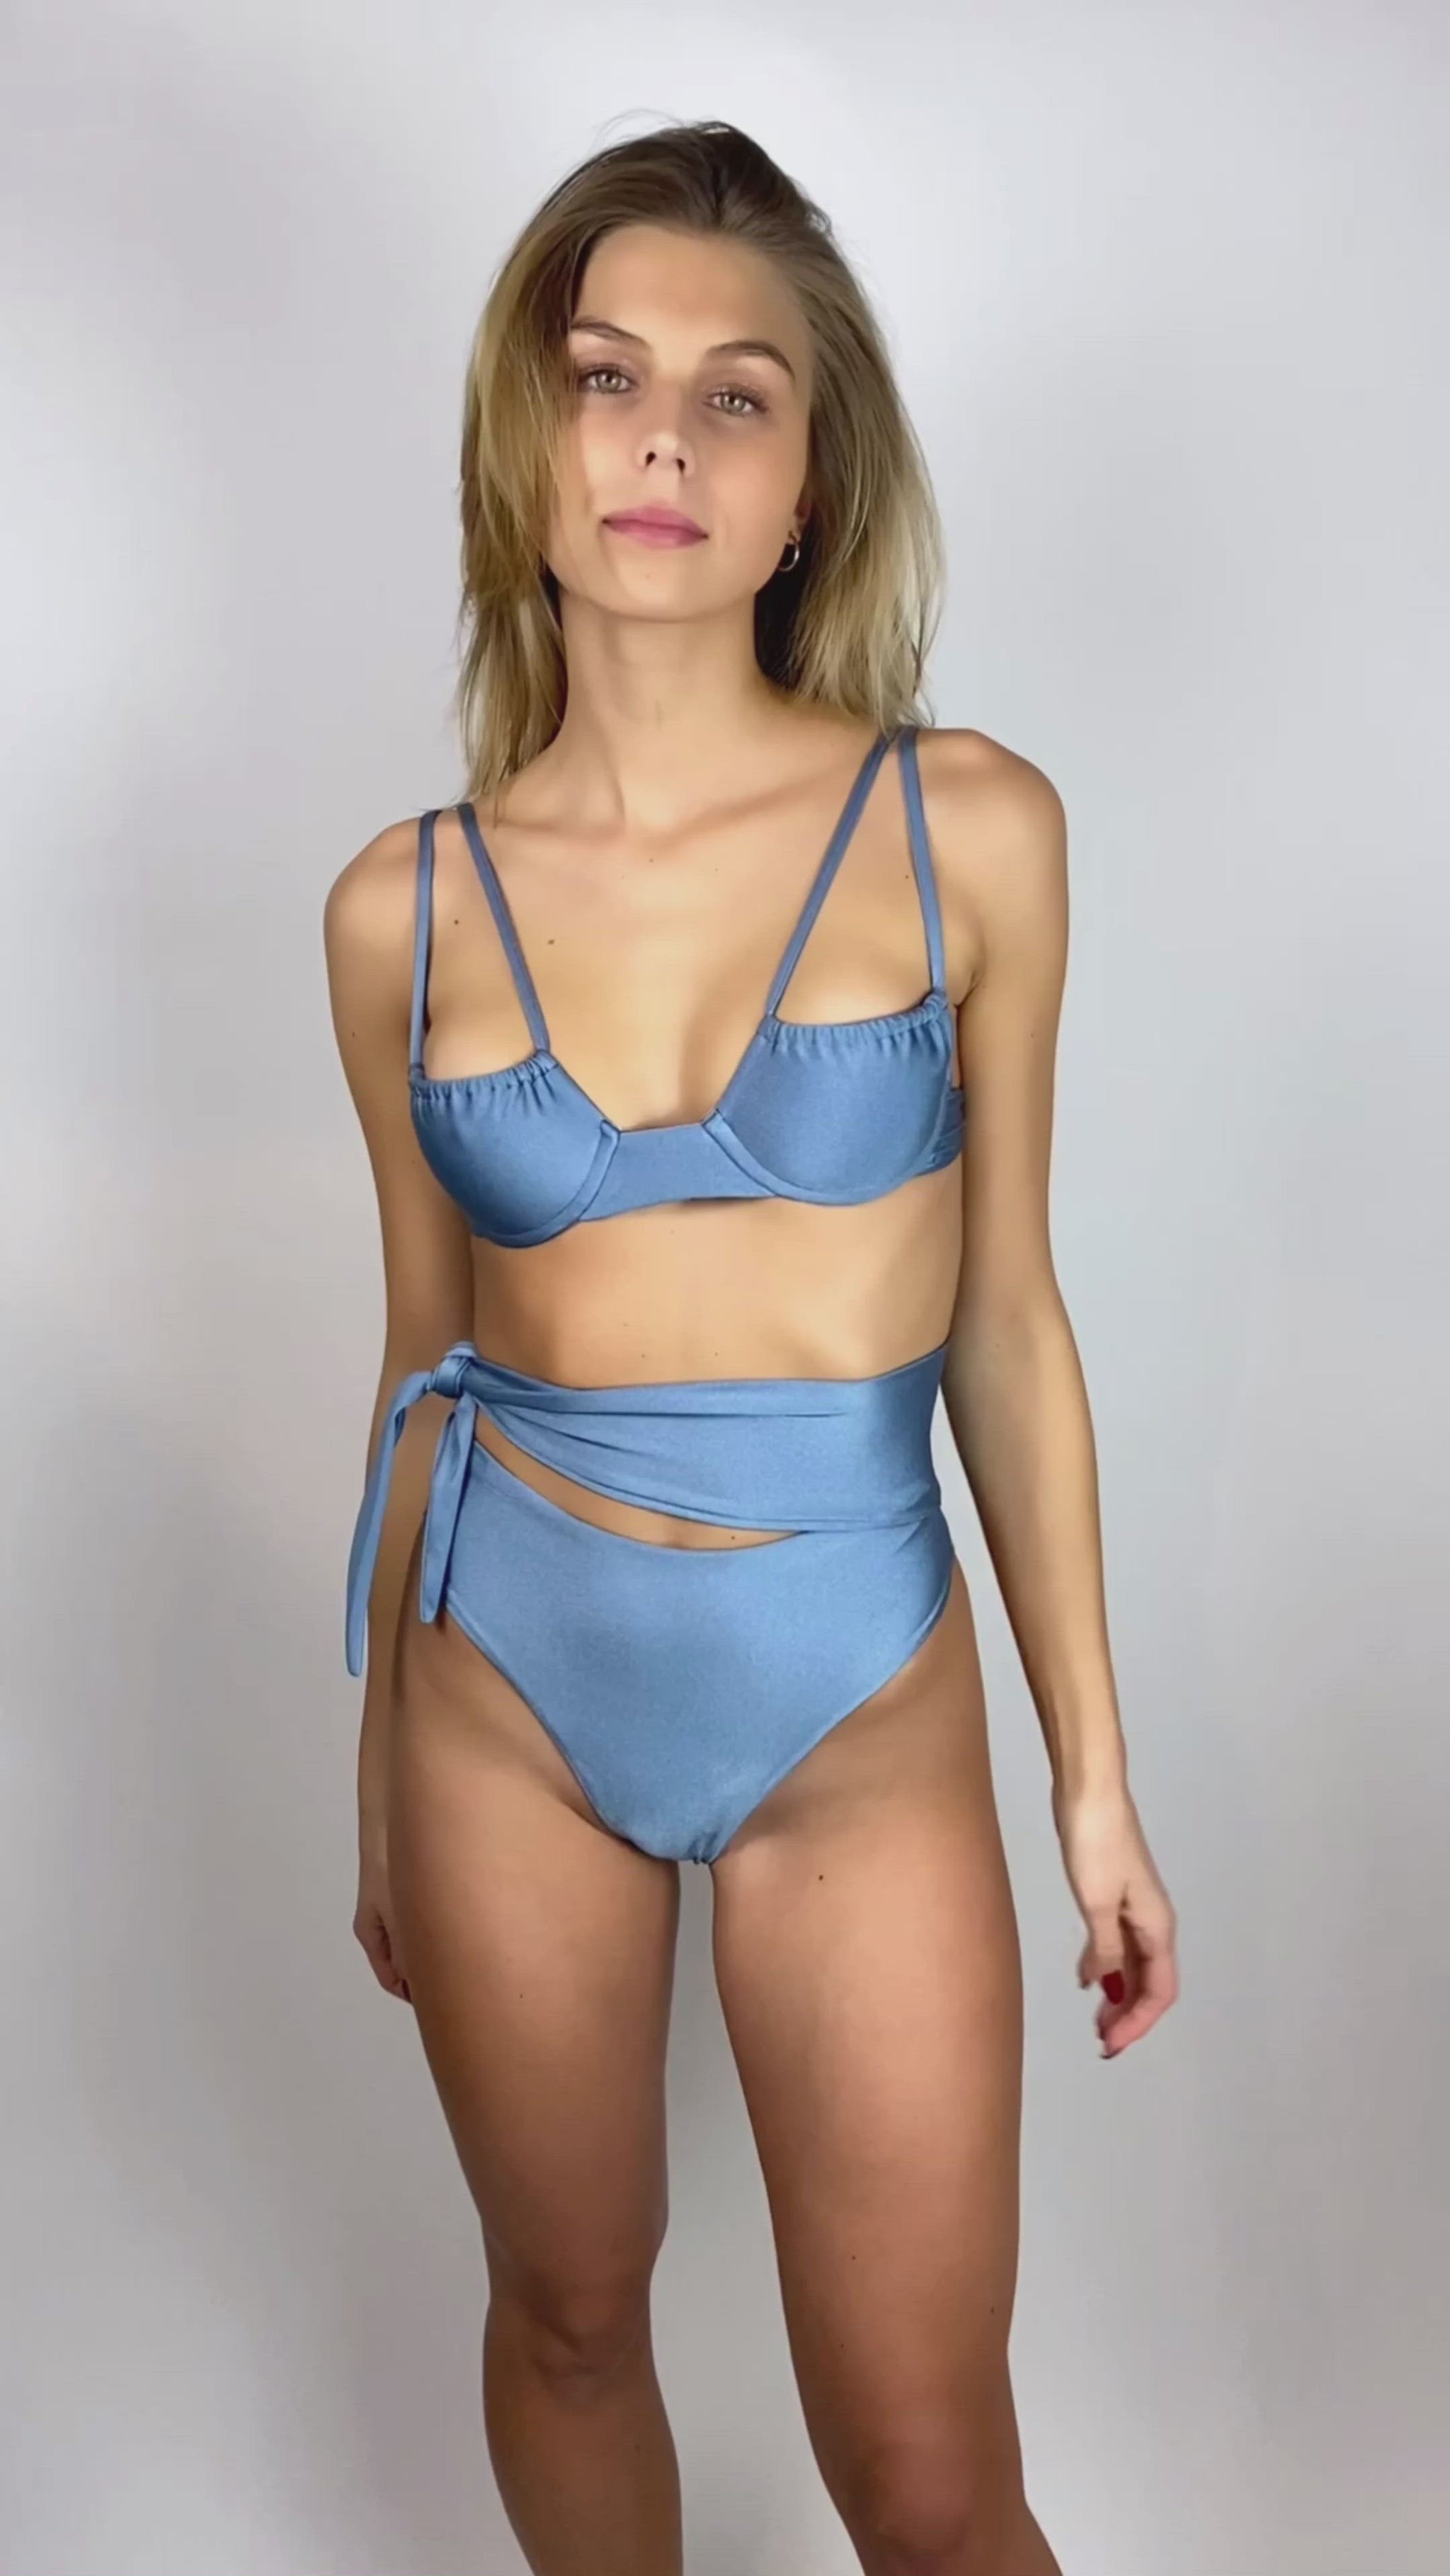 Ema bikini - azula. An adjustable and medium coverage bikini with Brazilian style.